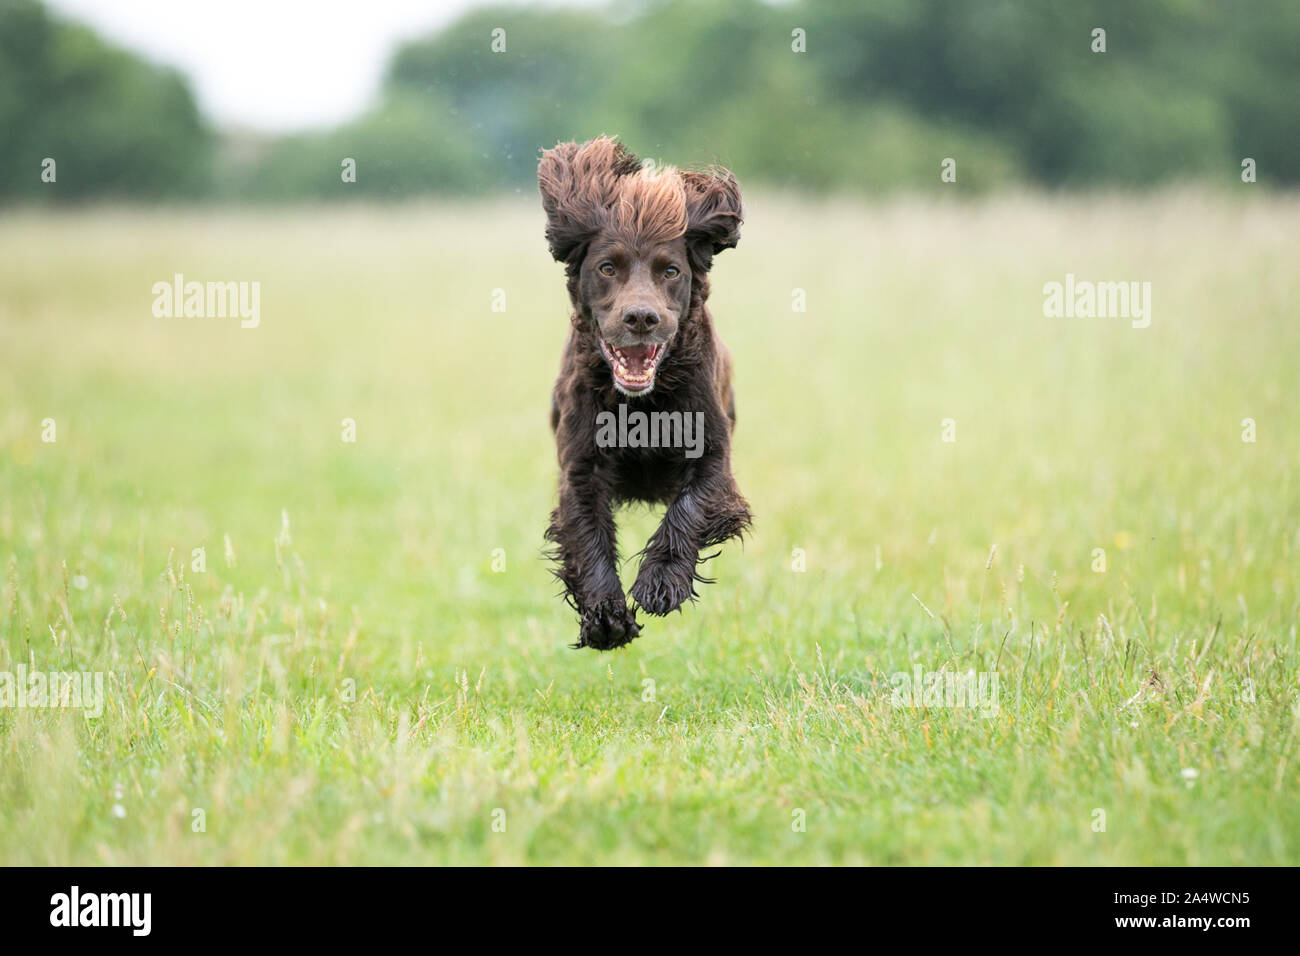 Brown dog running along grass Stock Photo